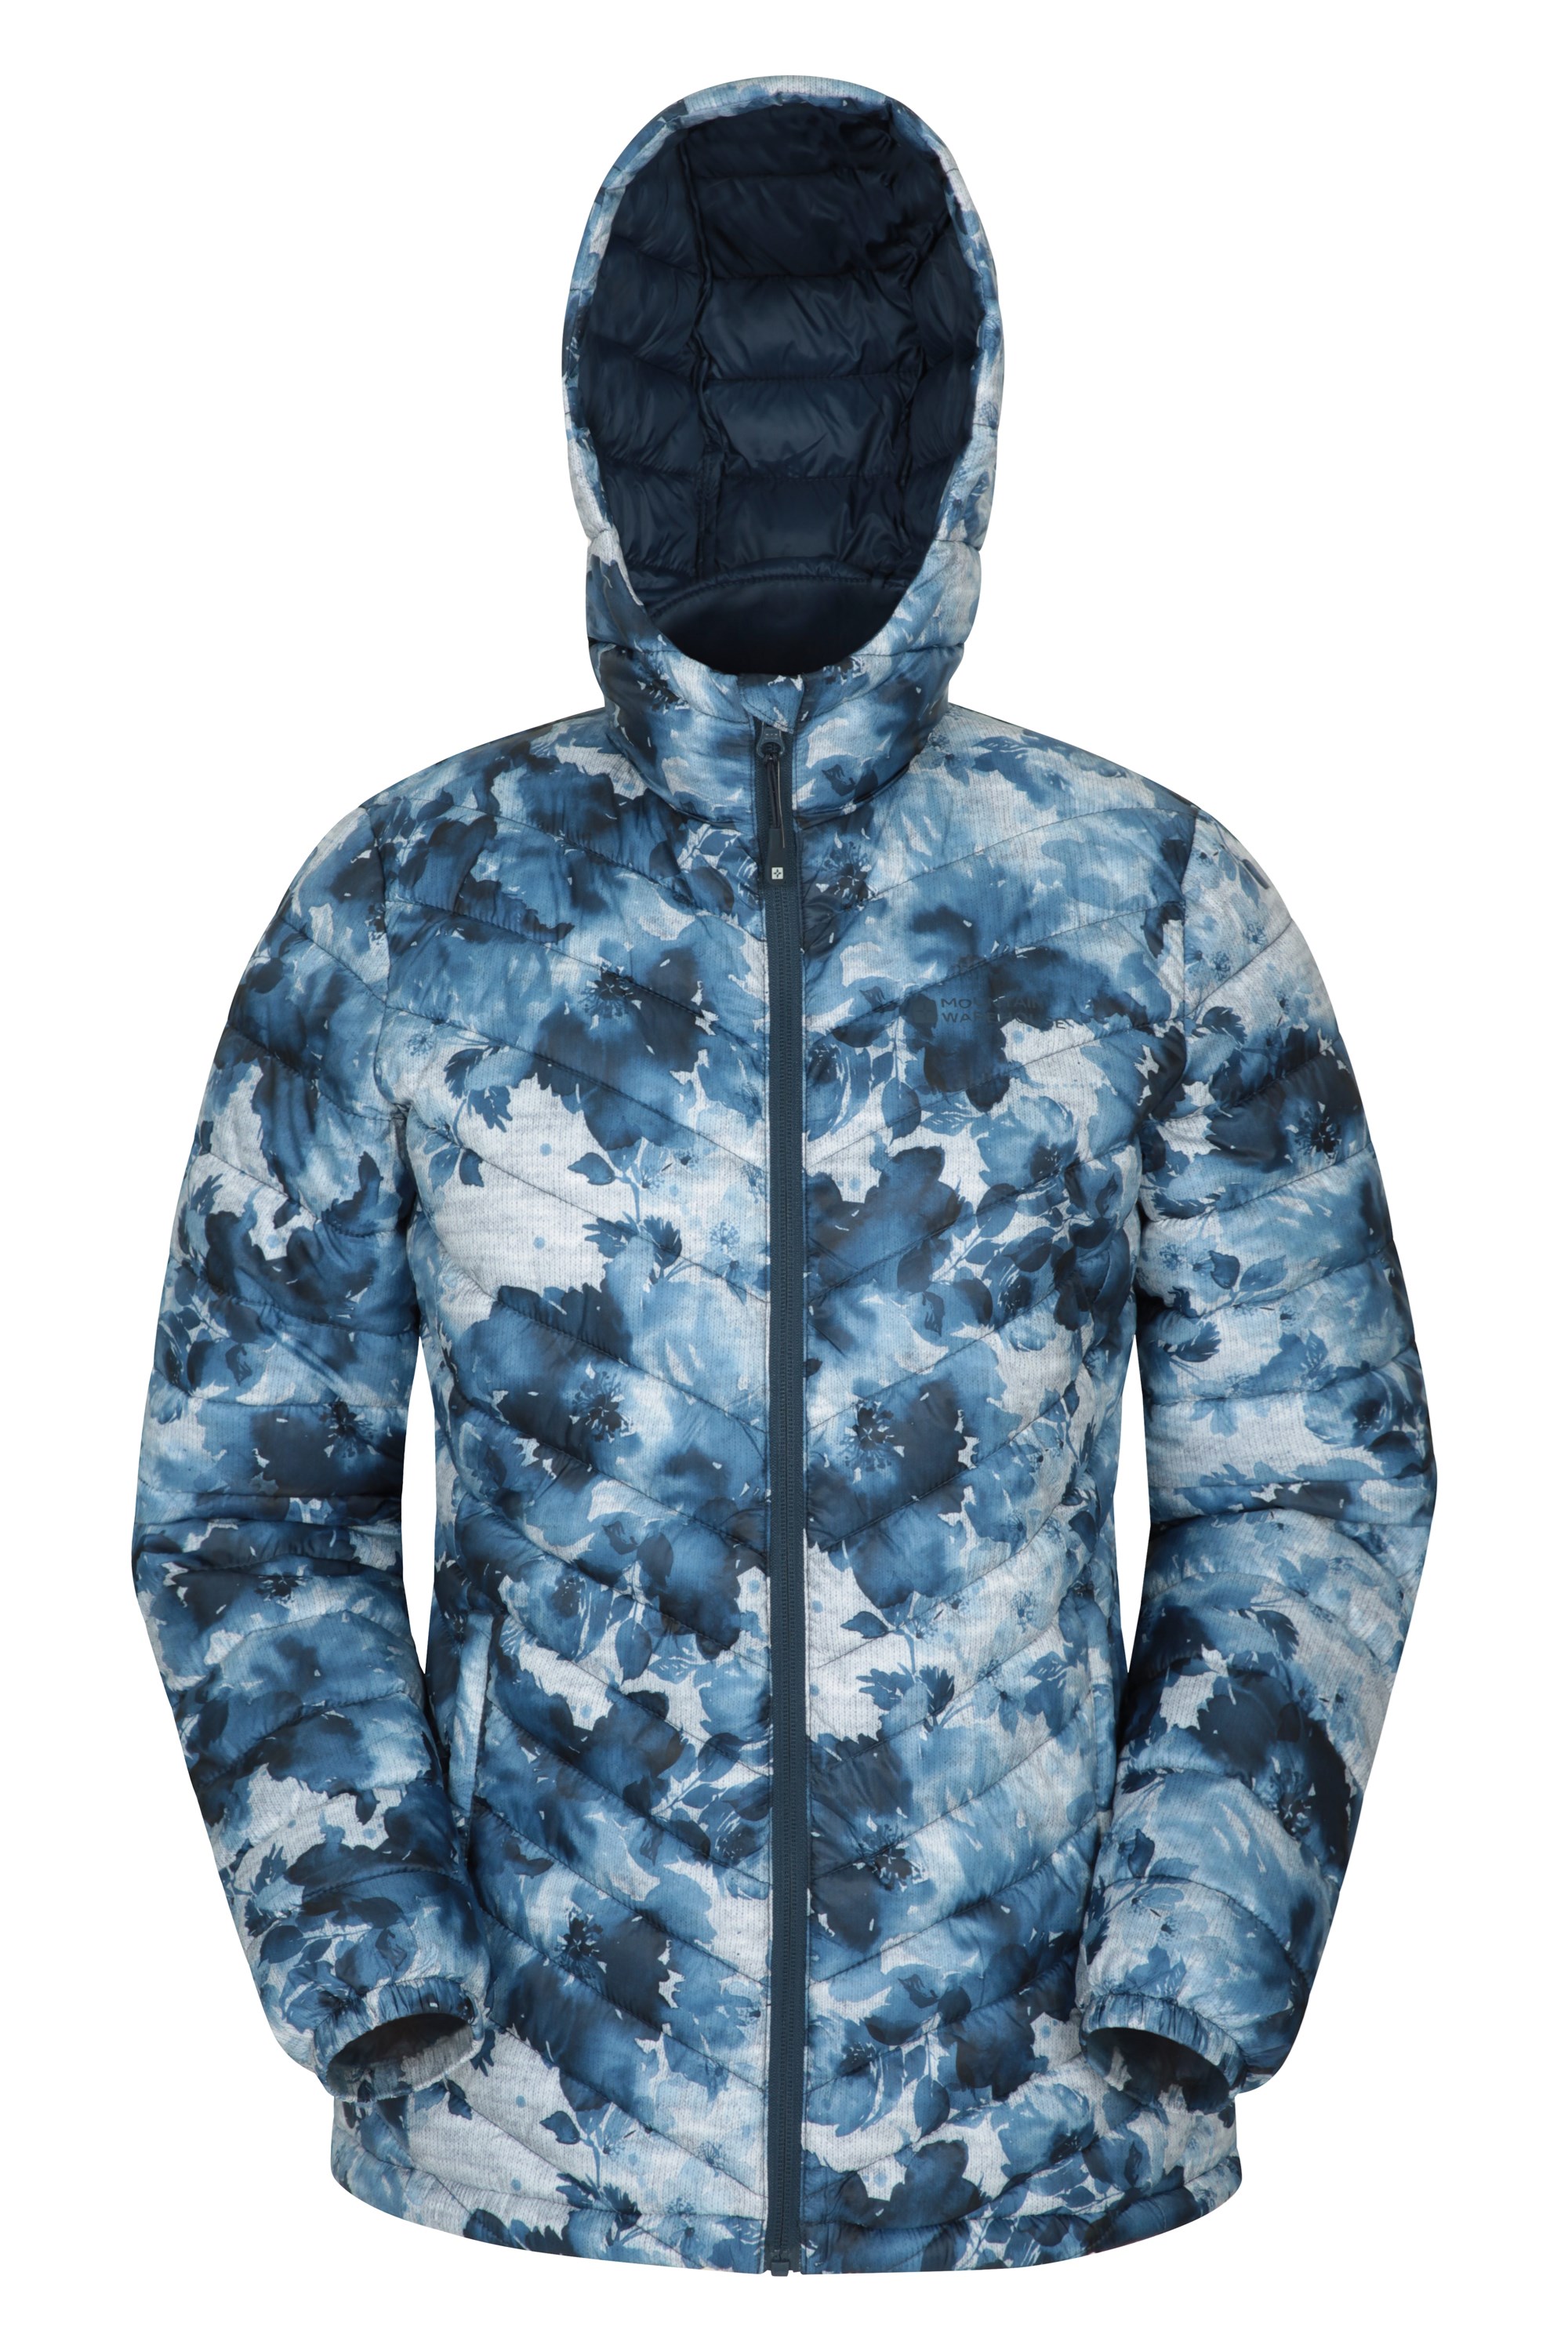 Mountain Warehouse Printed Mens Jacket Waterproof & Lightweight in Camouflage 